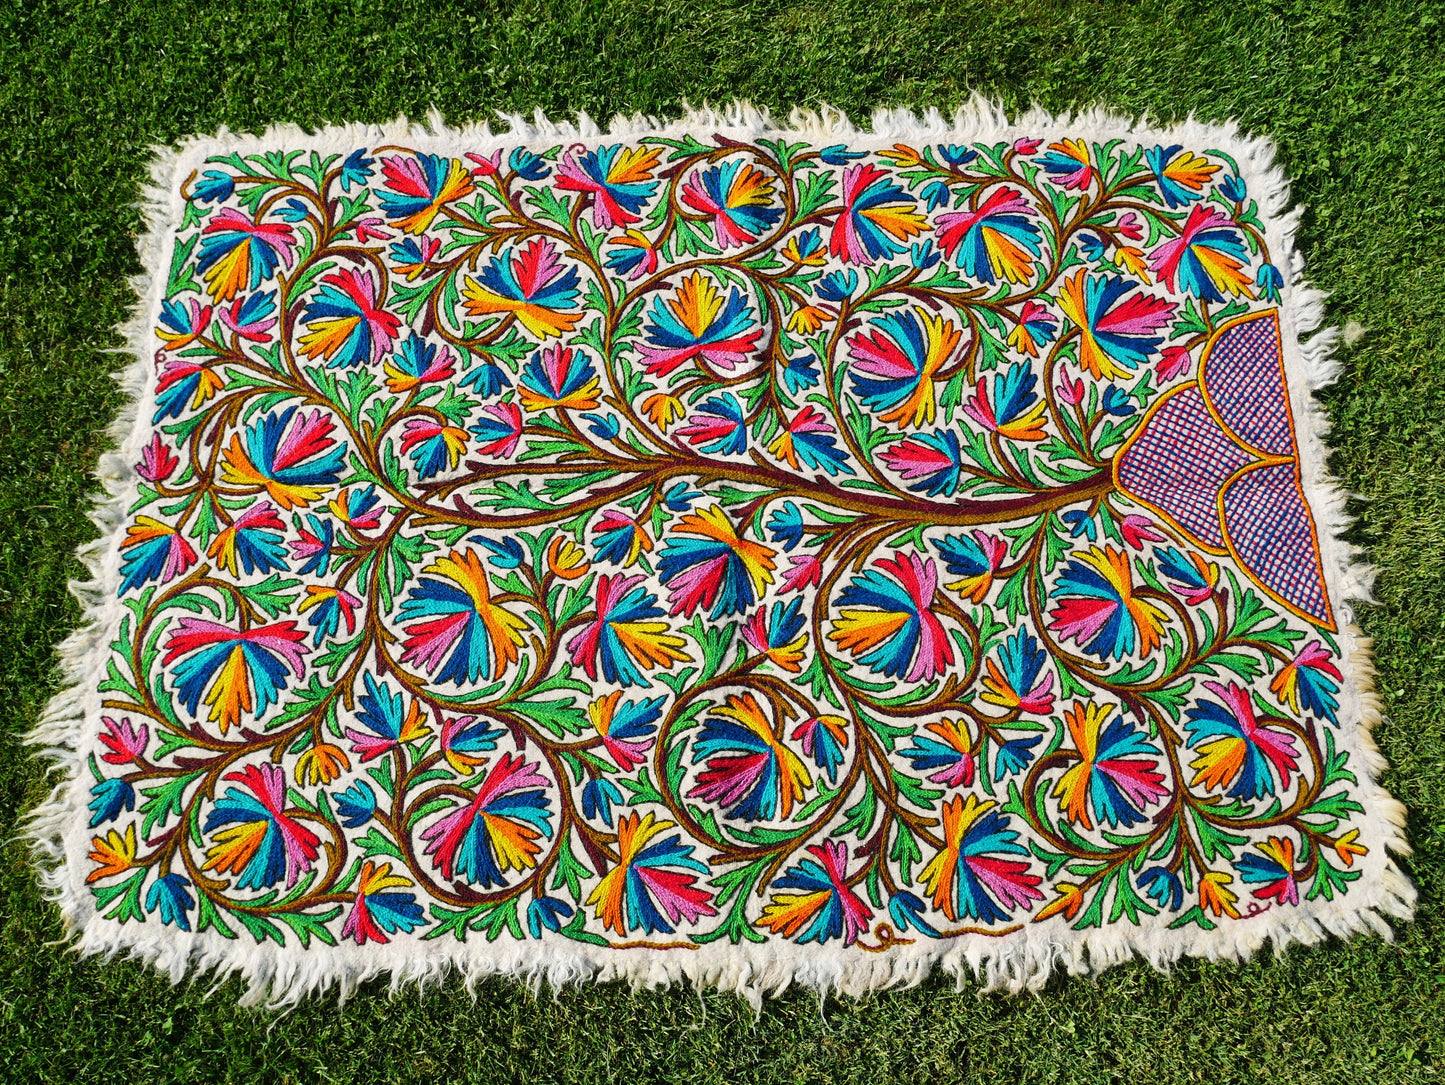 Handmade wool rug "Tree of life" traditional Namda felt rug from Kashmir | hand felted, embroidered 6x4 bohemian rug - colorful floral rug